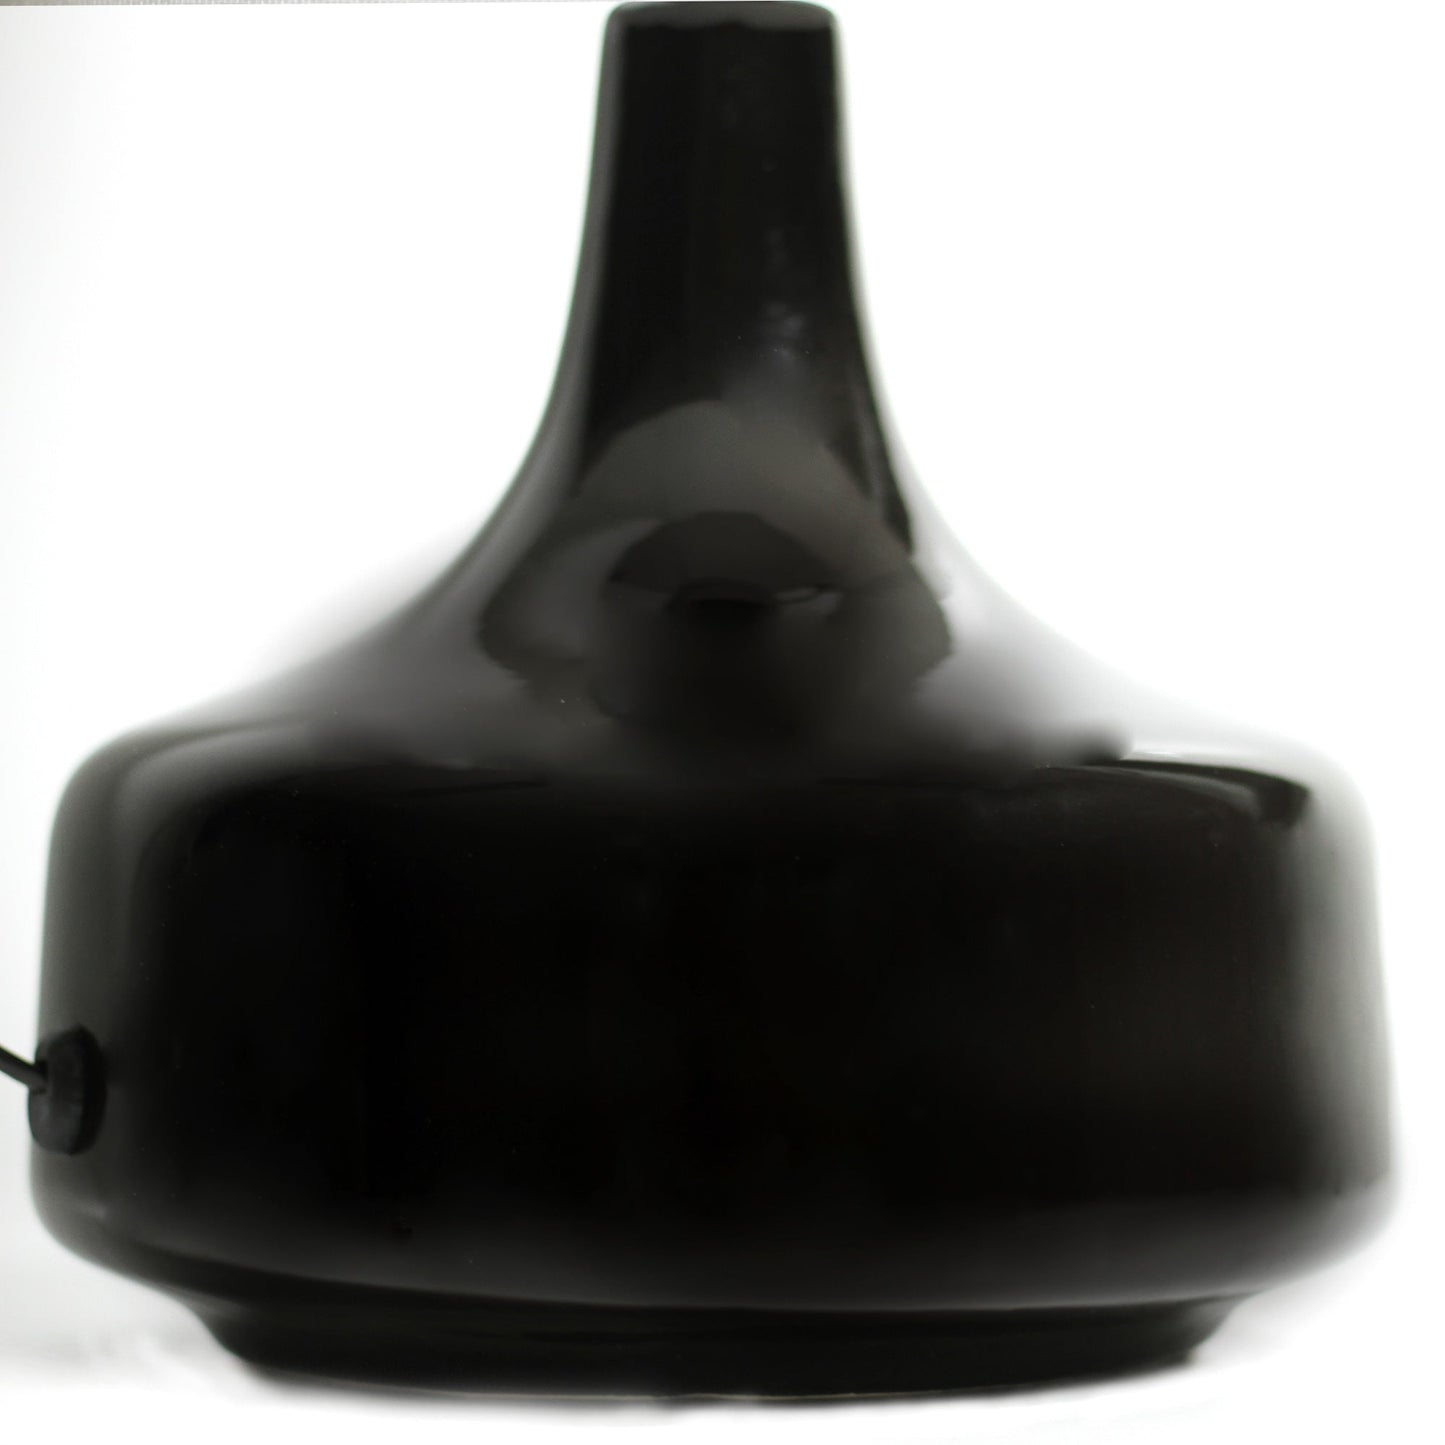 Fat Shack Table Lamp - Black